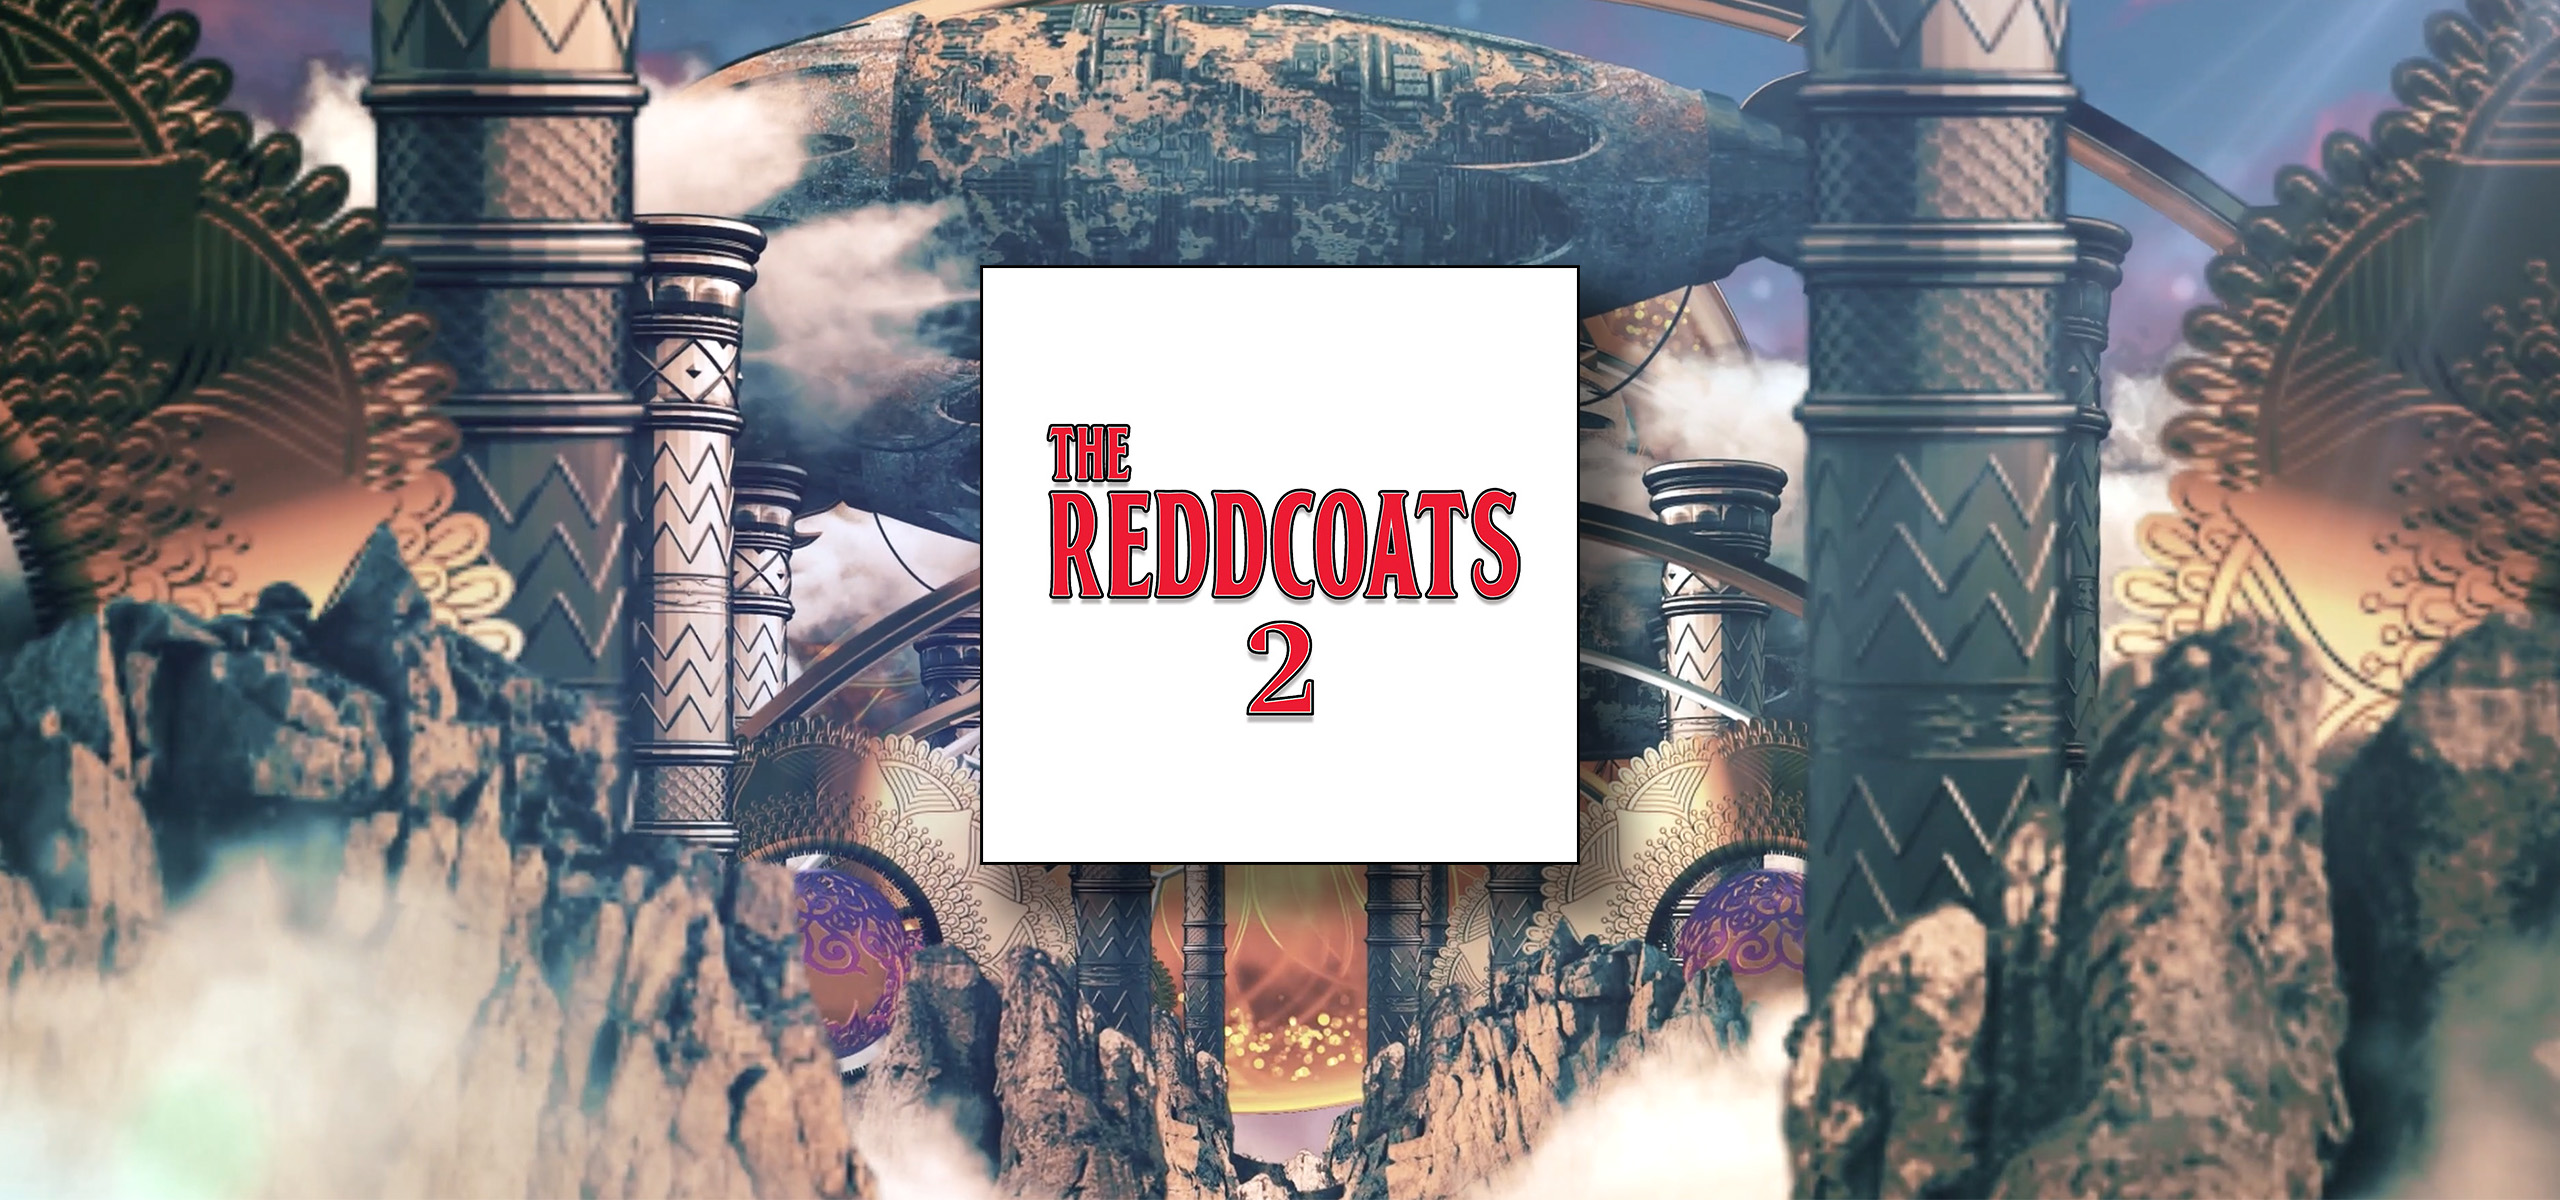 THE REDDCOATS 2